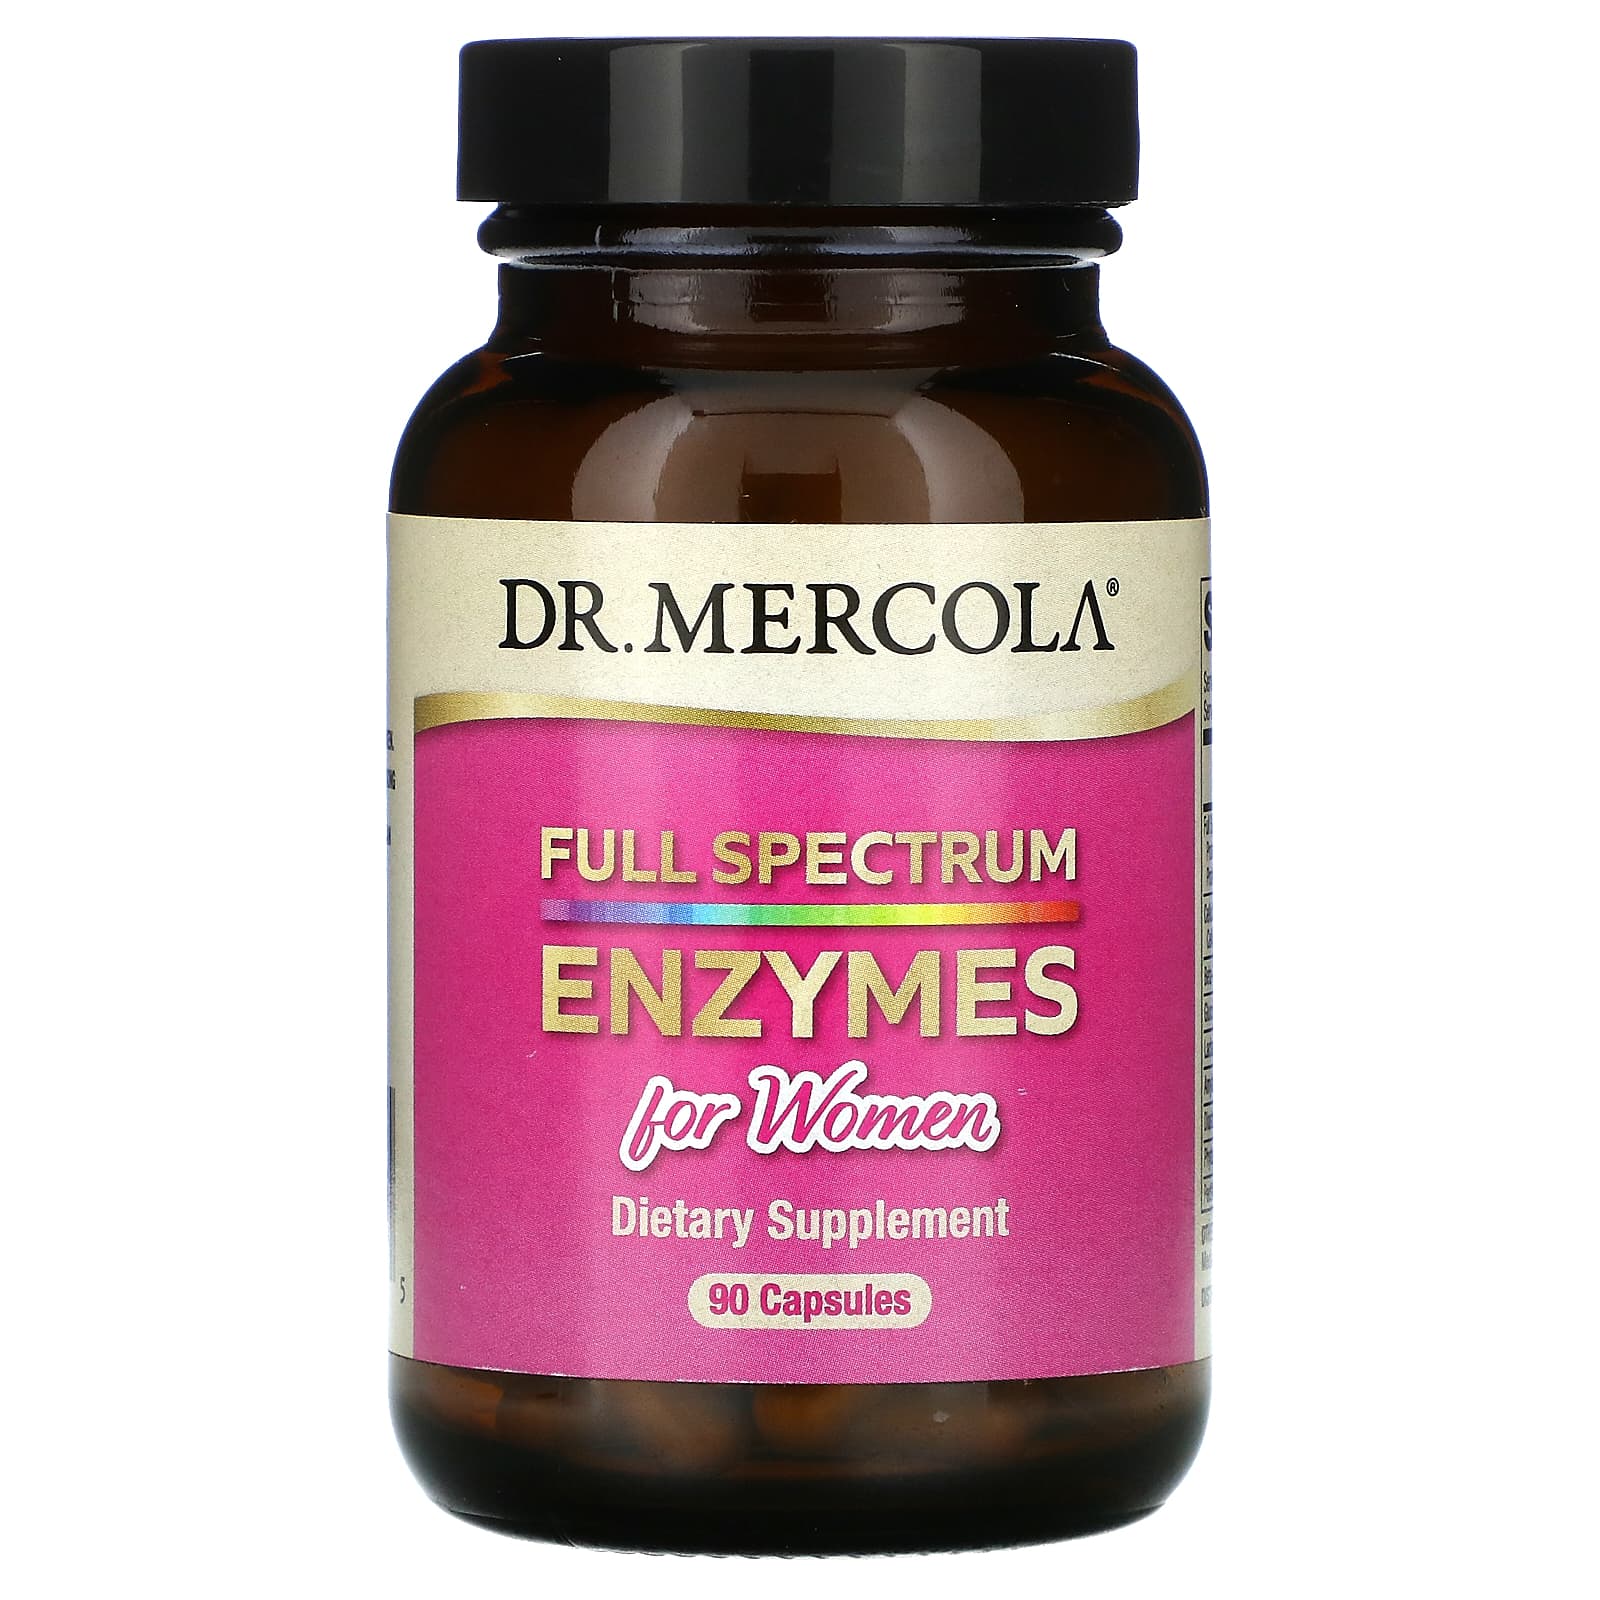 Dr. Mercola Full Spectrum Enzymes For Women 90 Capsules mercola solspring органическое золотое молоко 2 64 унции 75 г dr mercola